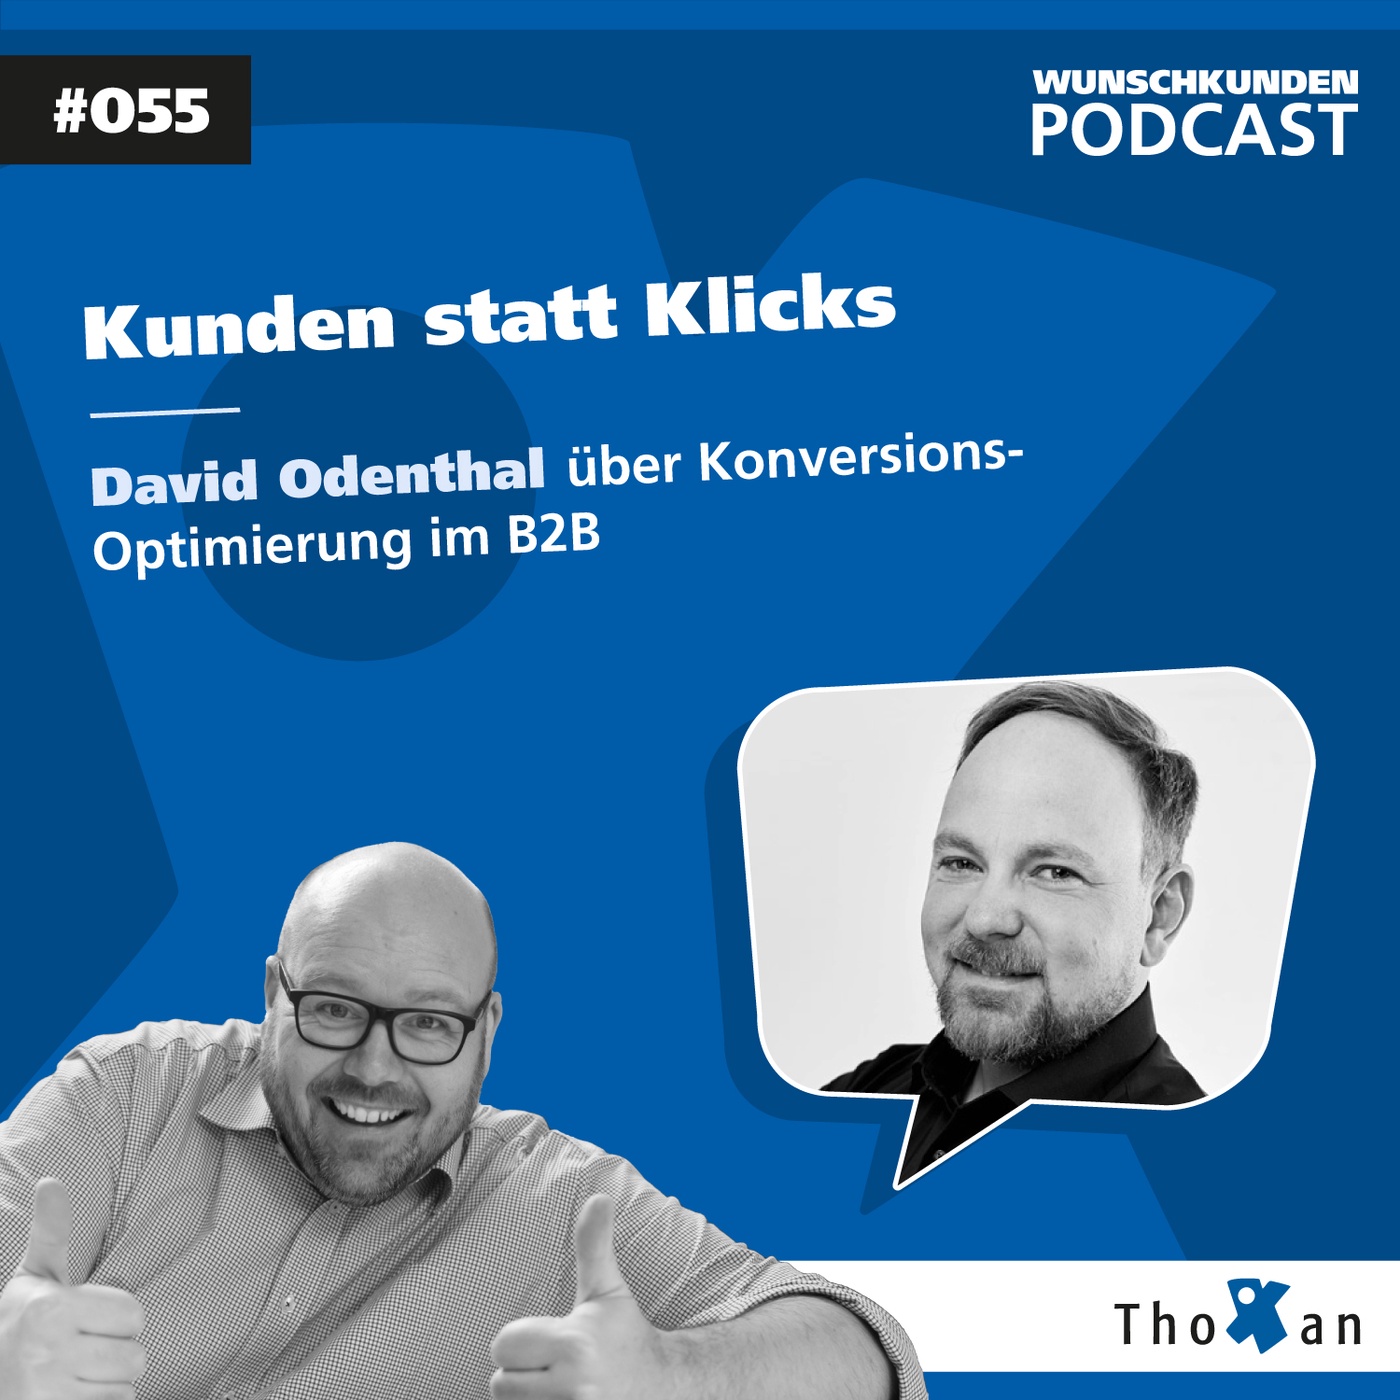 Kunden statt Klicks: David Odenthal über Konversions-Optimierung im B2B